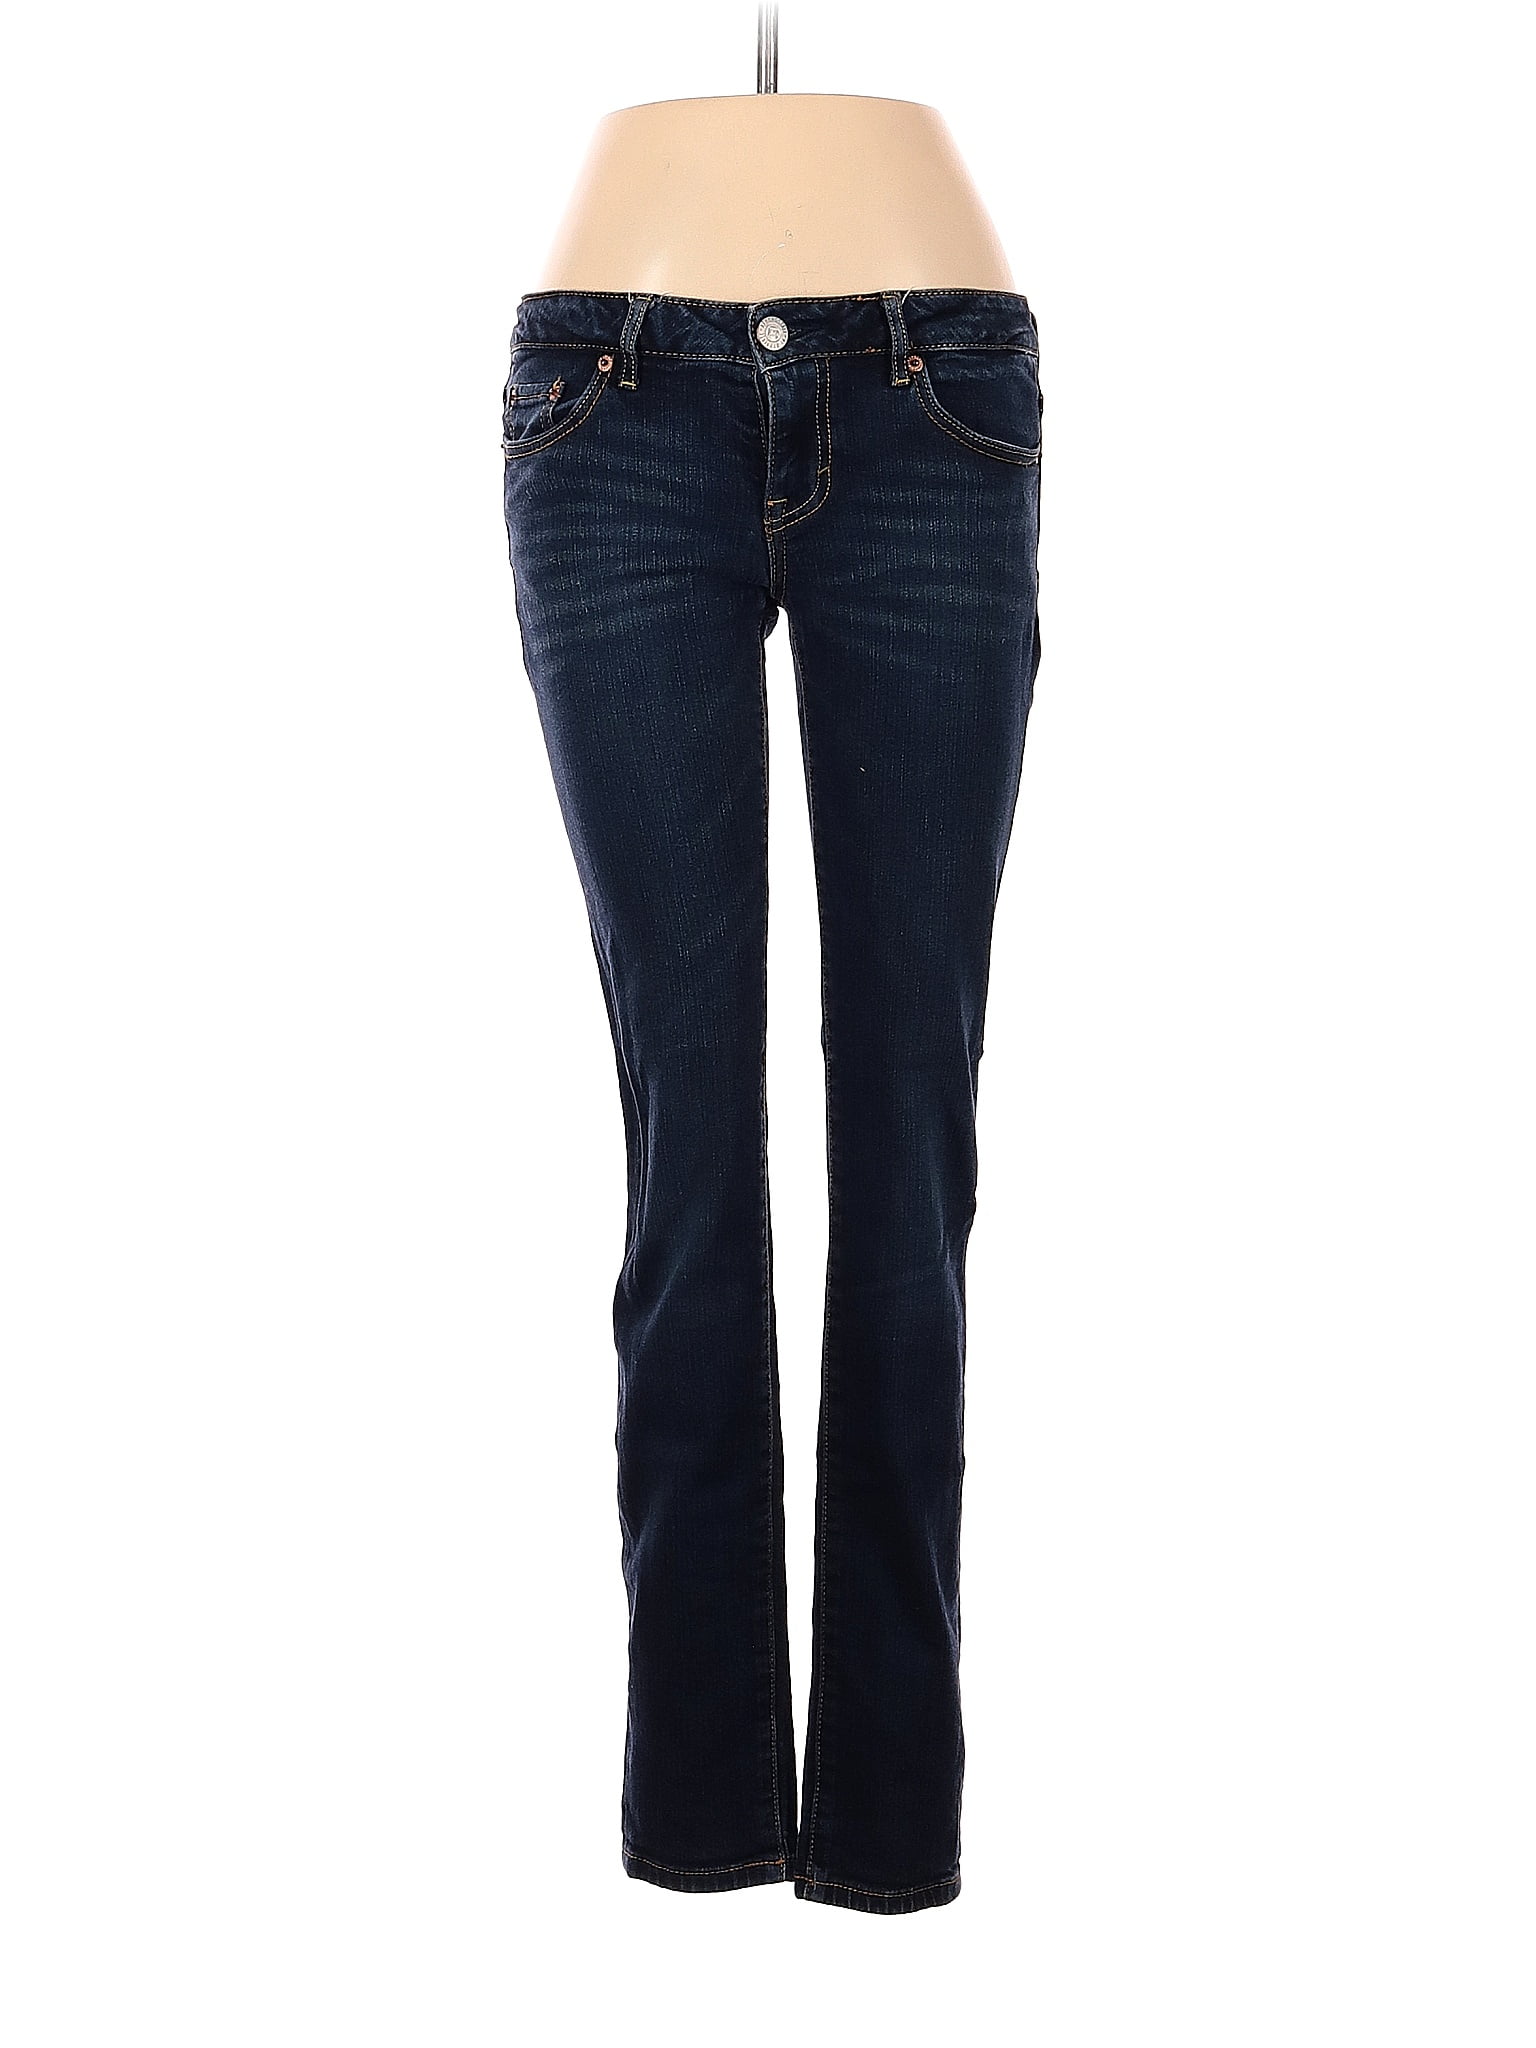 Juniors Aeropostale Womens Ashley Ultra Floral Skinny Fit Jeans 404 13/14x32 